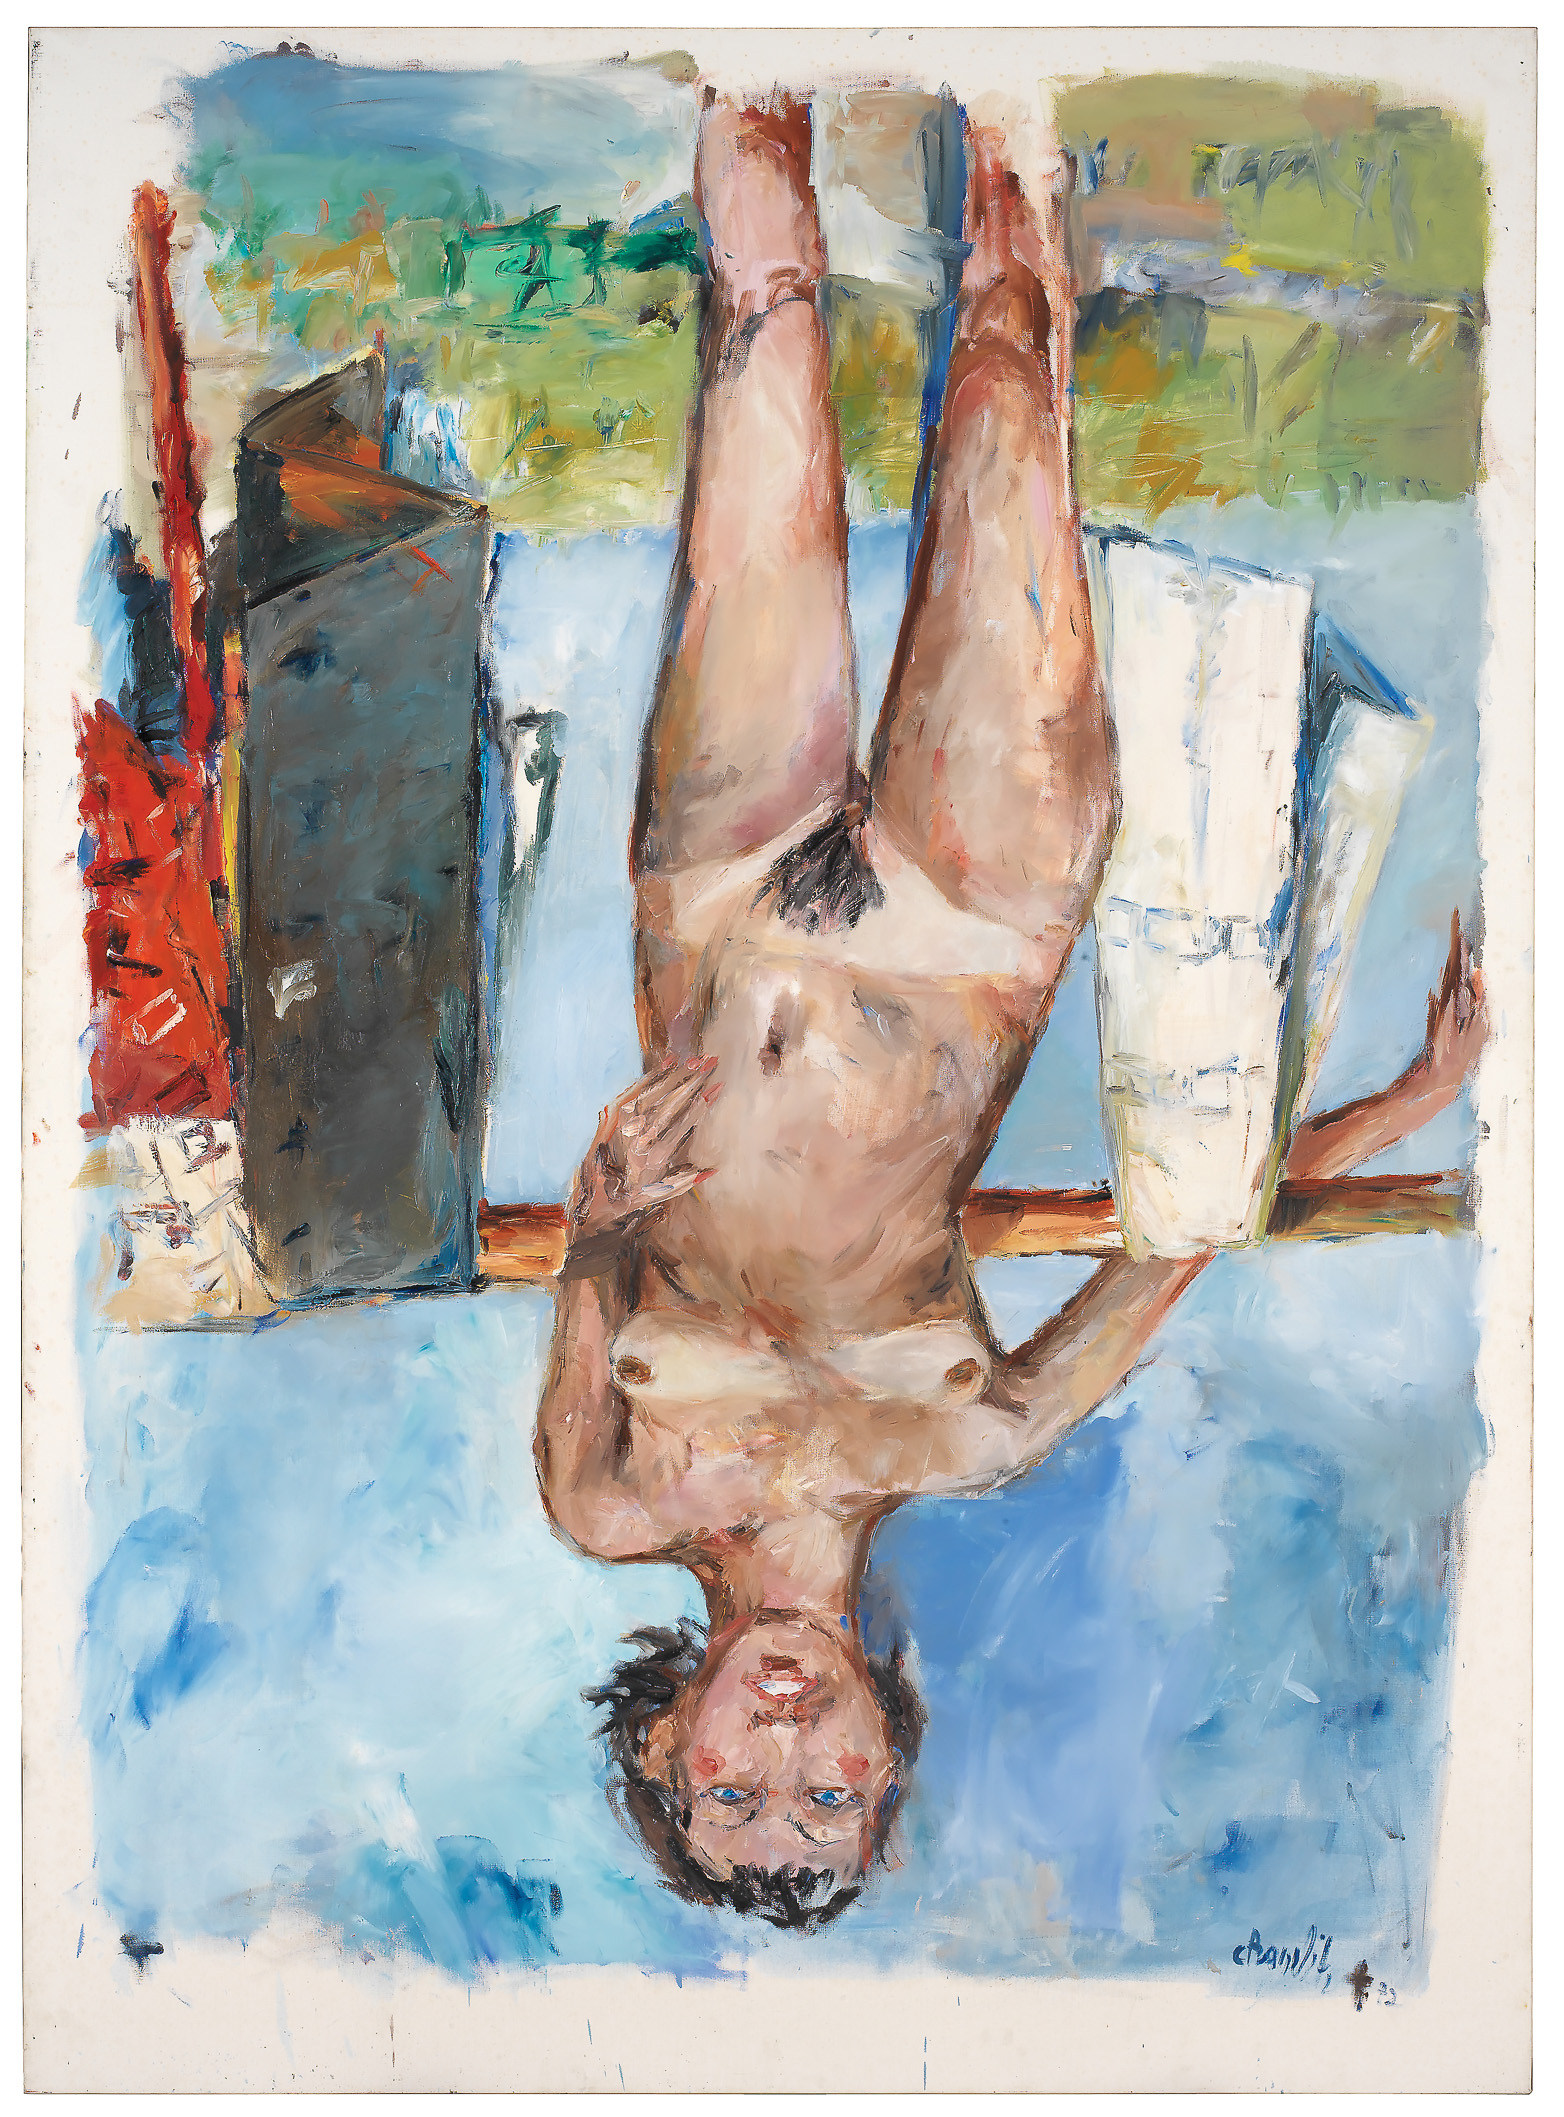 Georg Baselitz: Finger painting - female nude, 1972